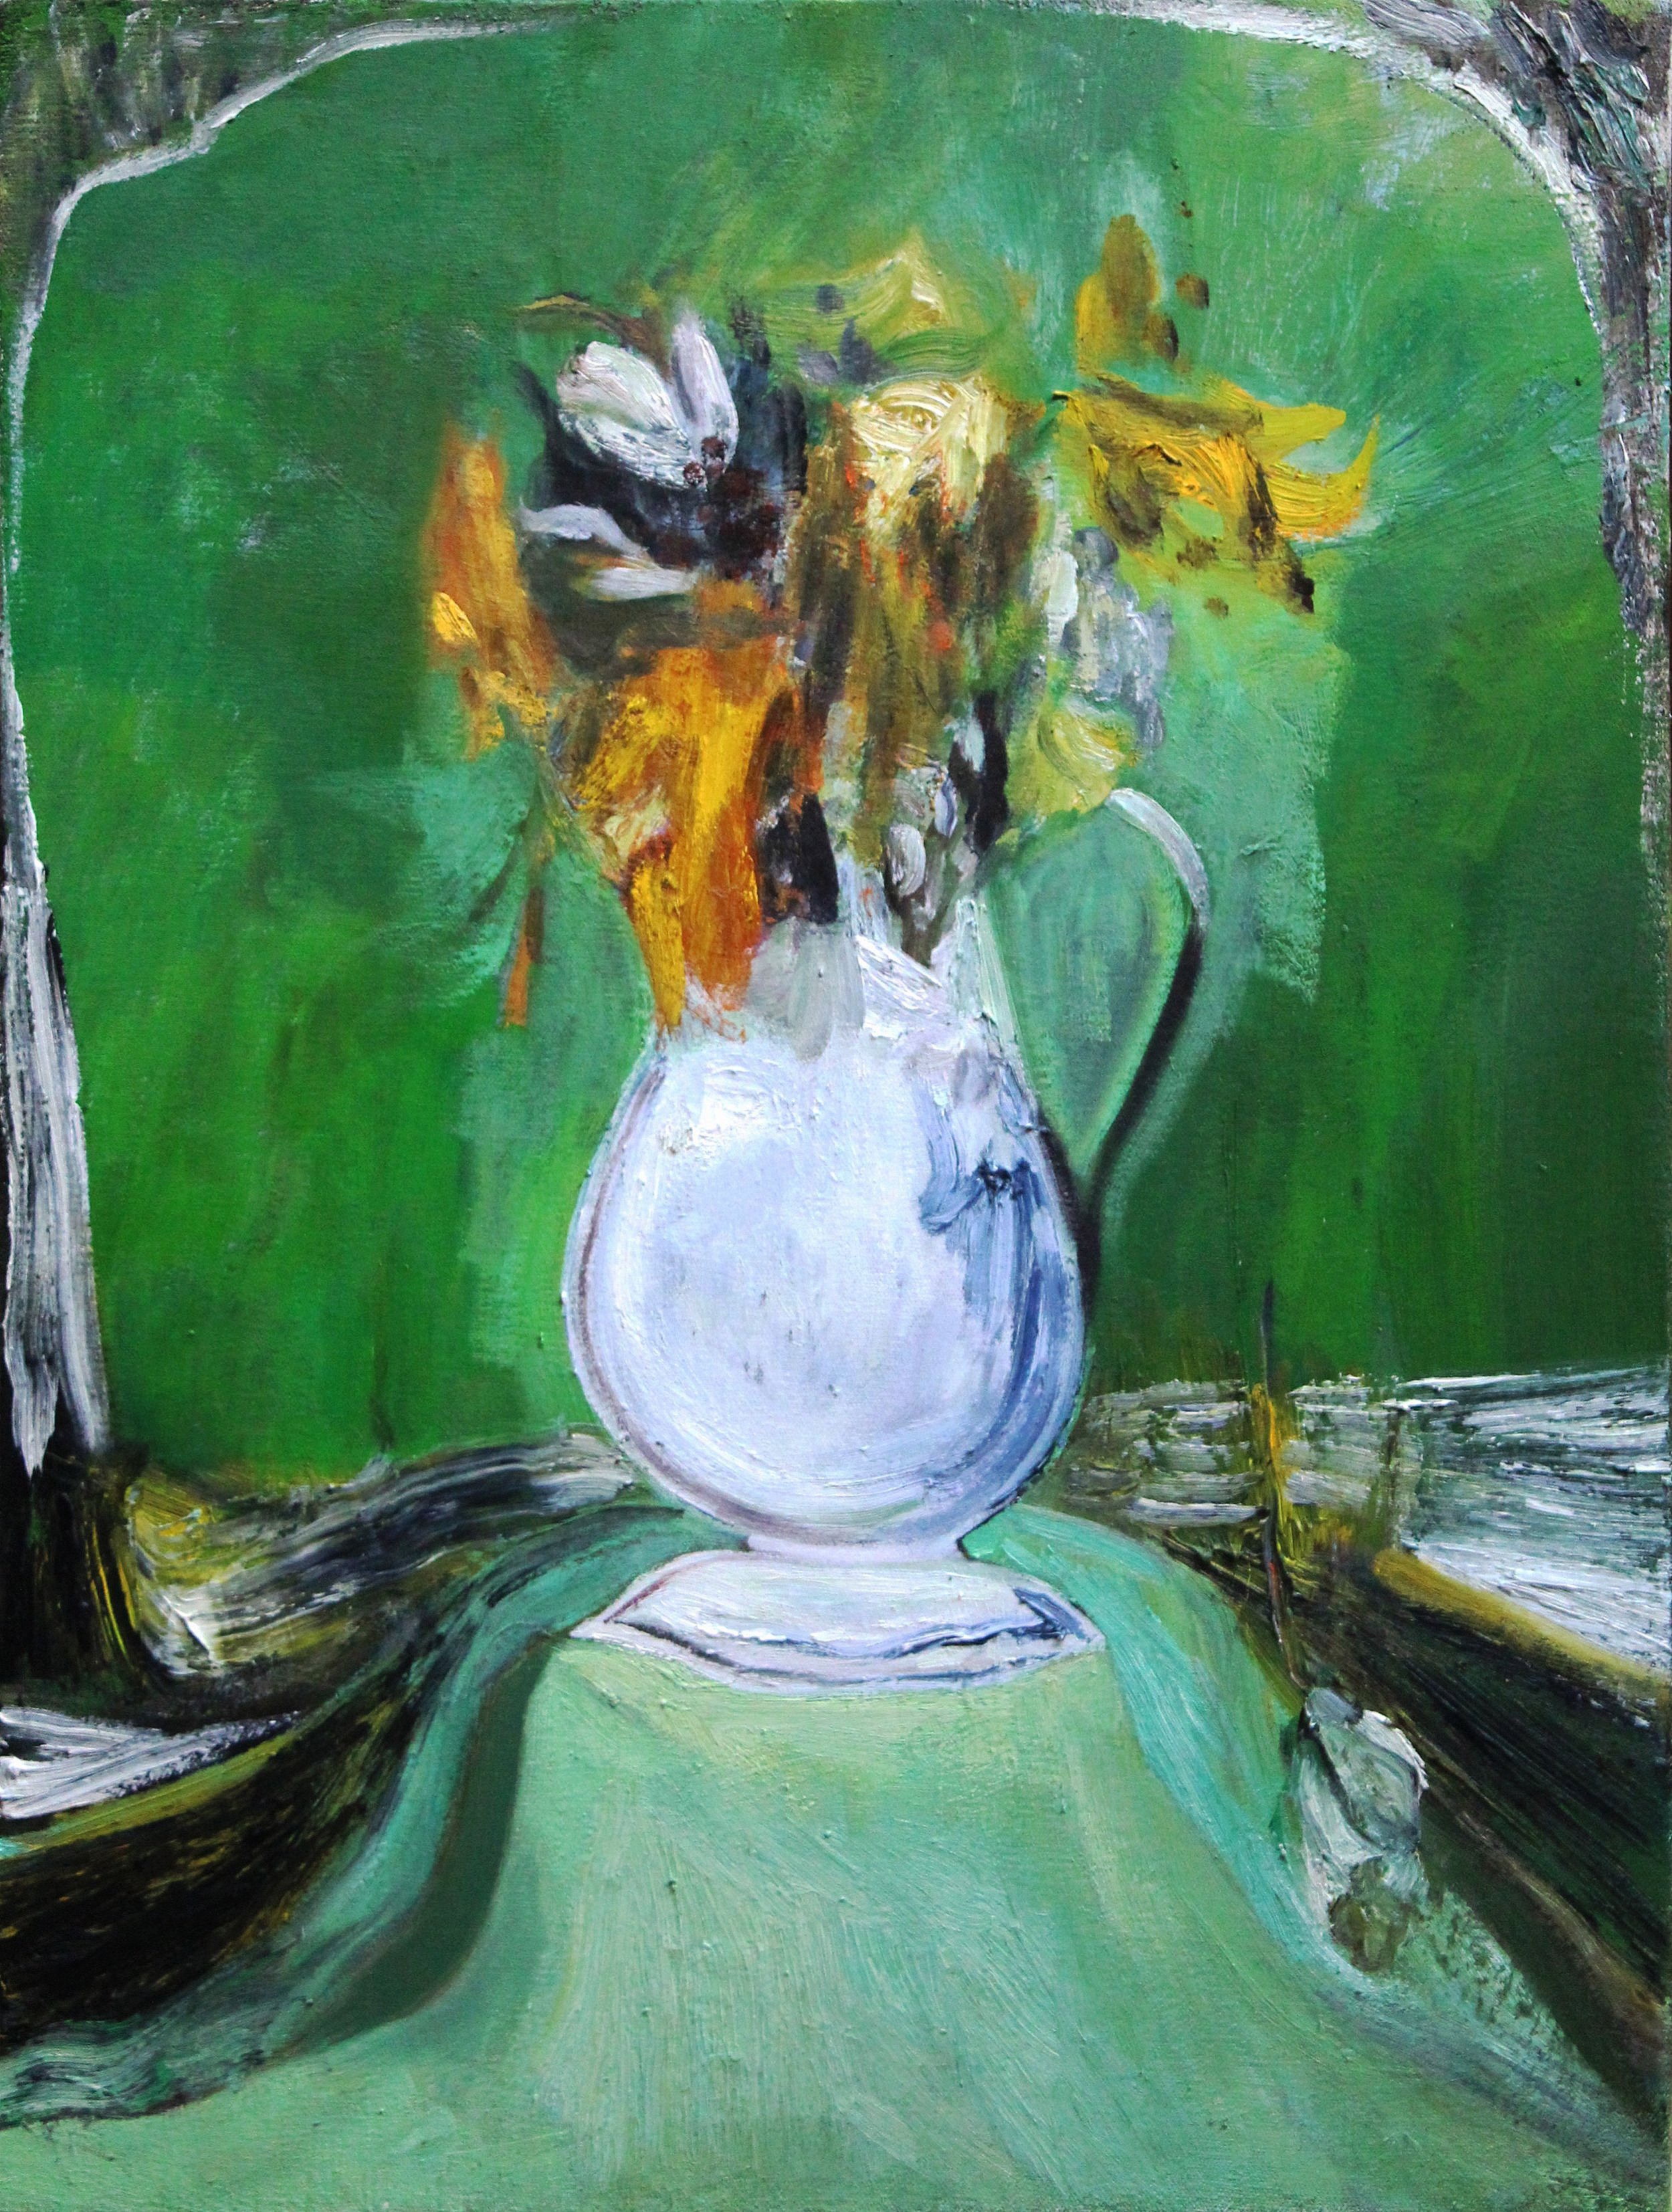 Stupid Death Vase, Oil on Canvas, 18x24 in 